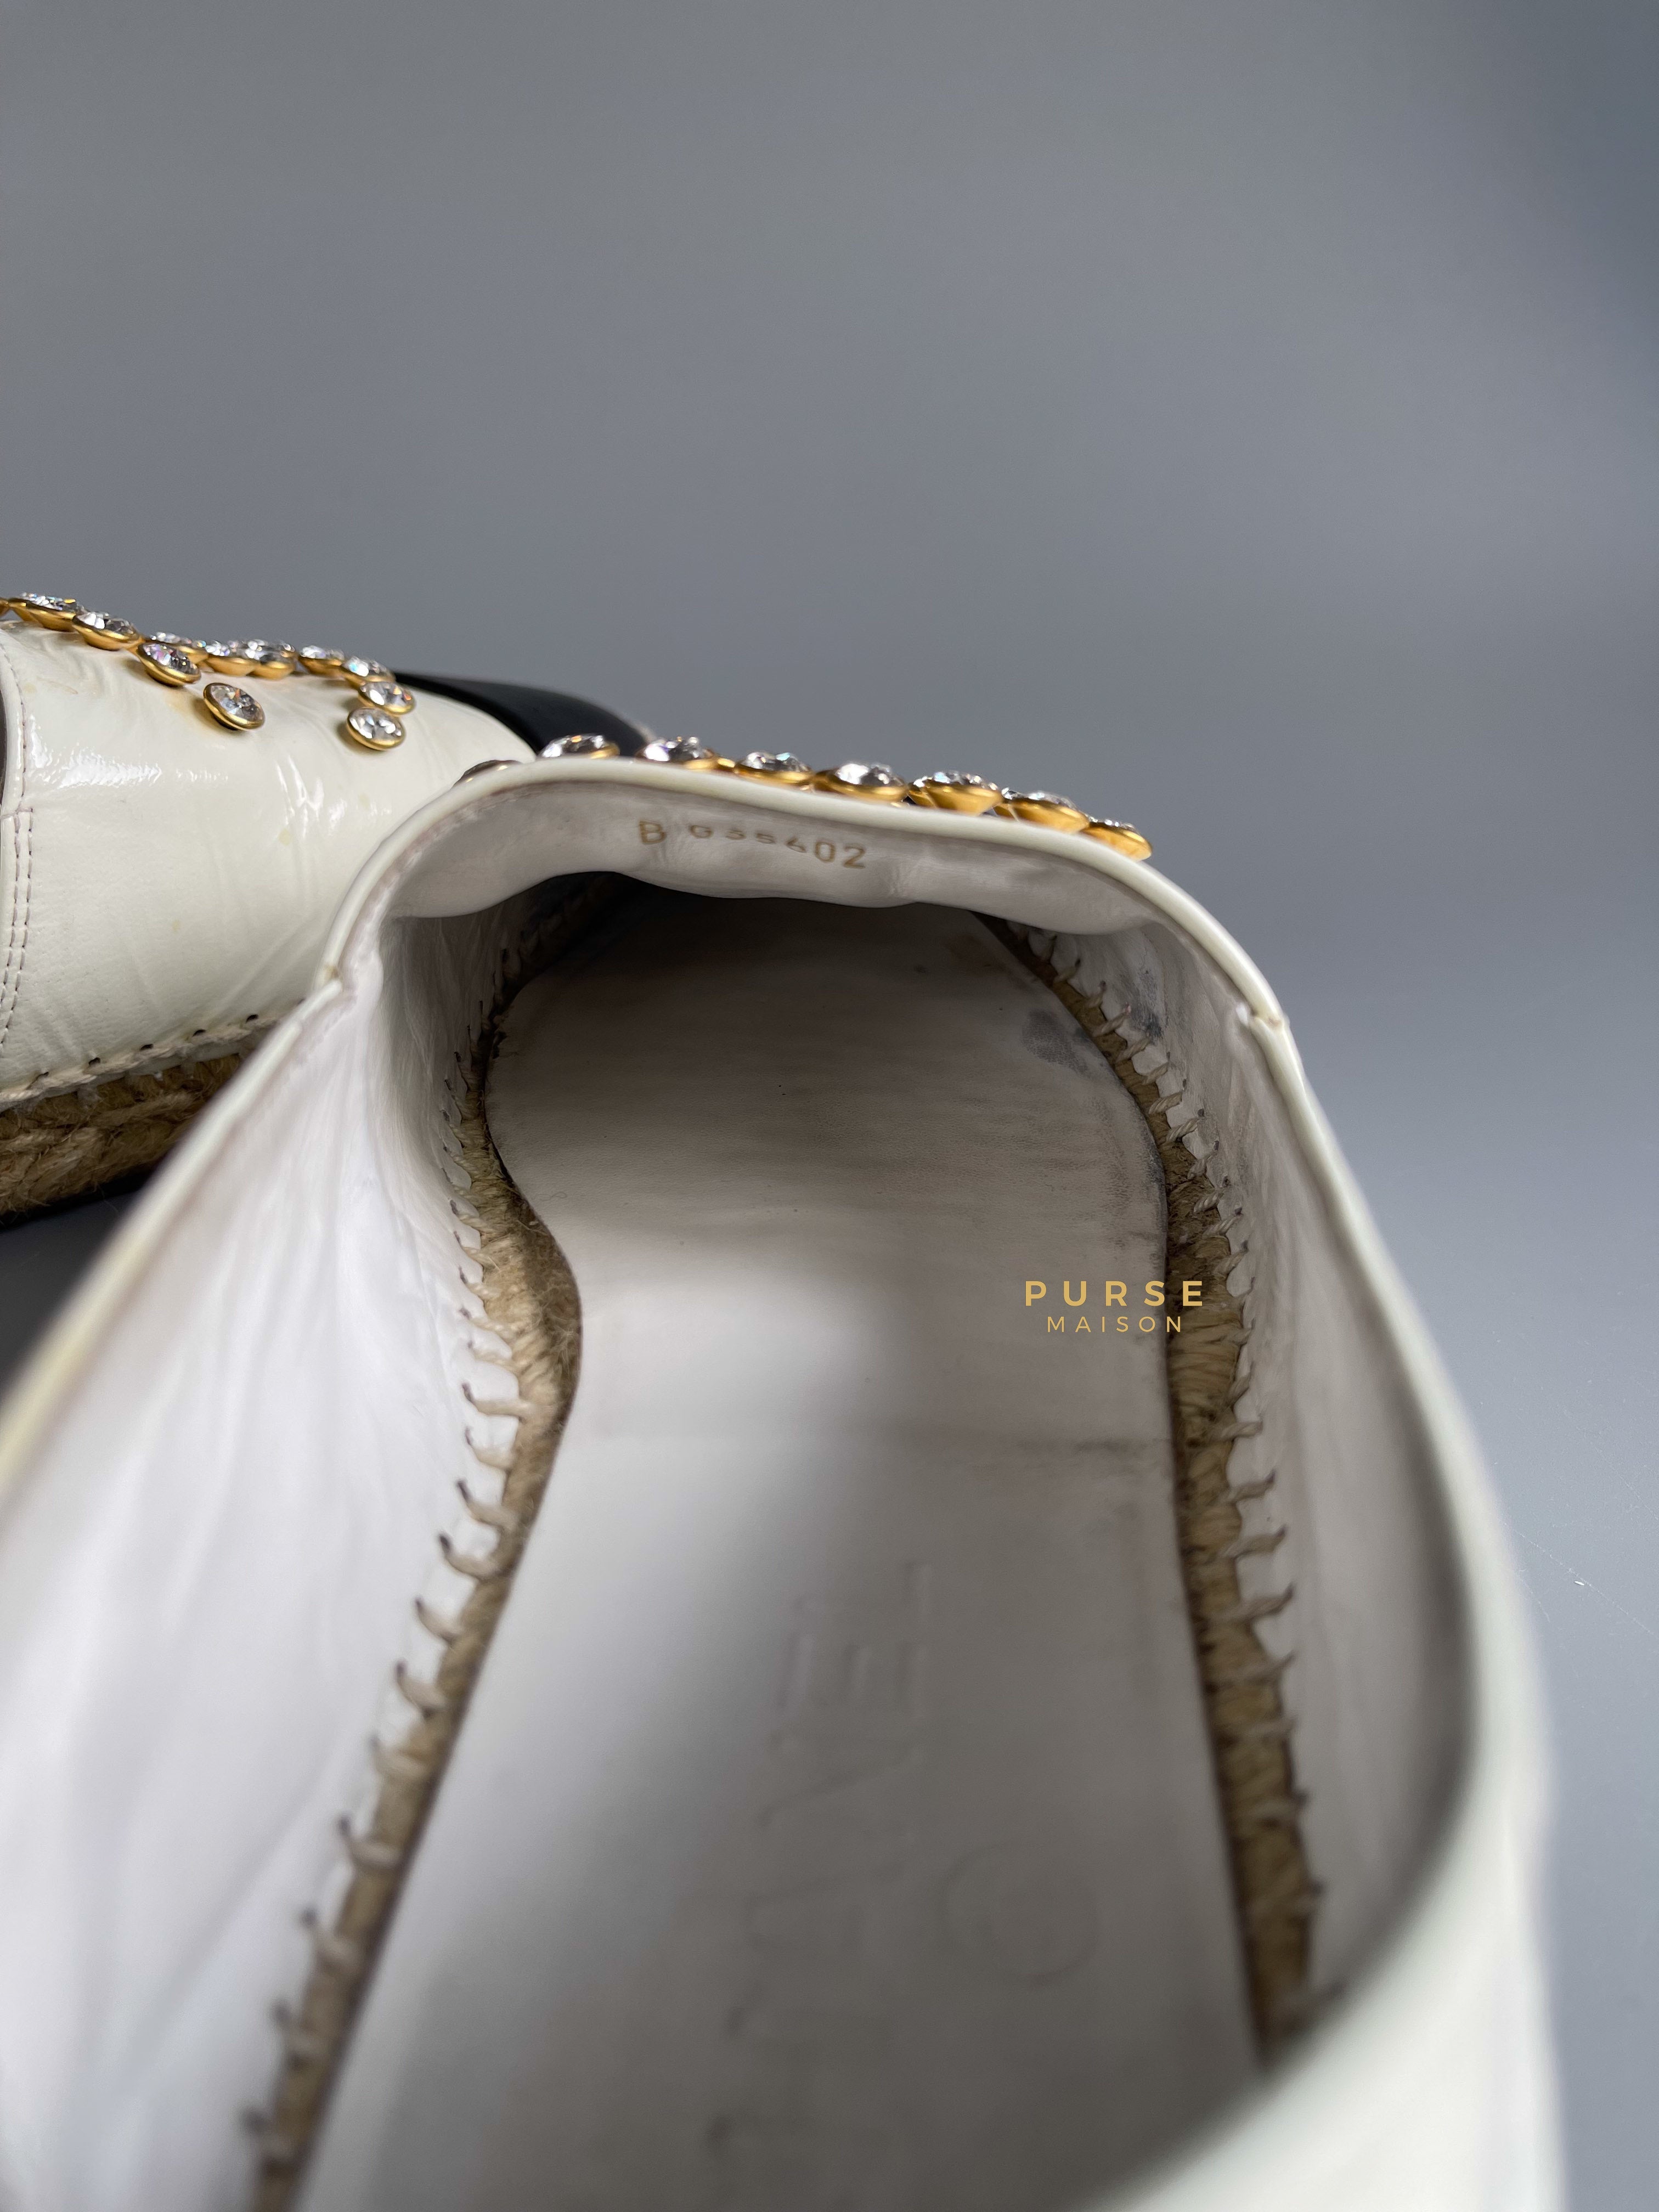 Chanel Espadrilles White Lambskin with Swarovski (Limited Ed) Size 38 EU (24cm) | Purse Maison Luxury Bags Shop